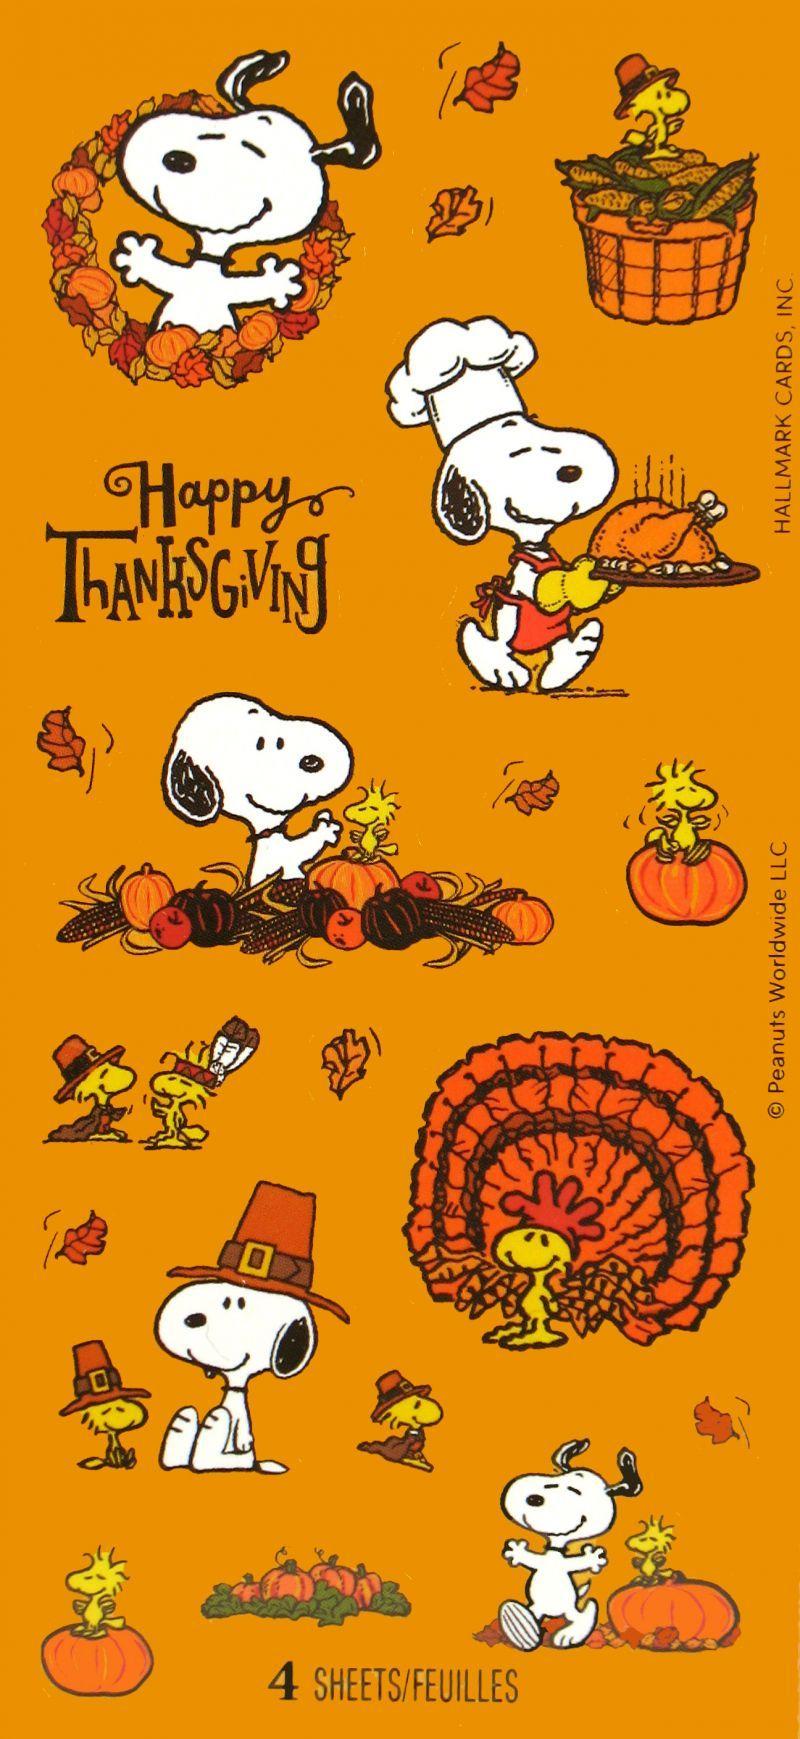 Snoopy wallpaper, Thanksgiving snoopy .com